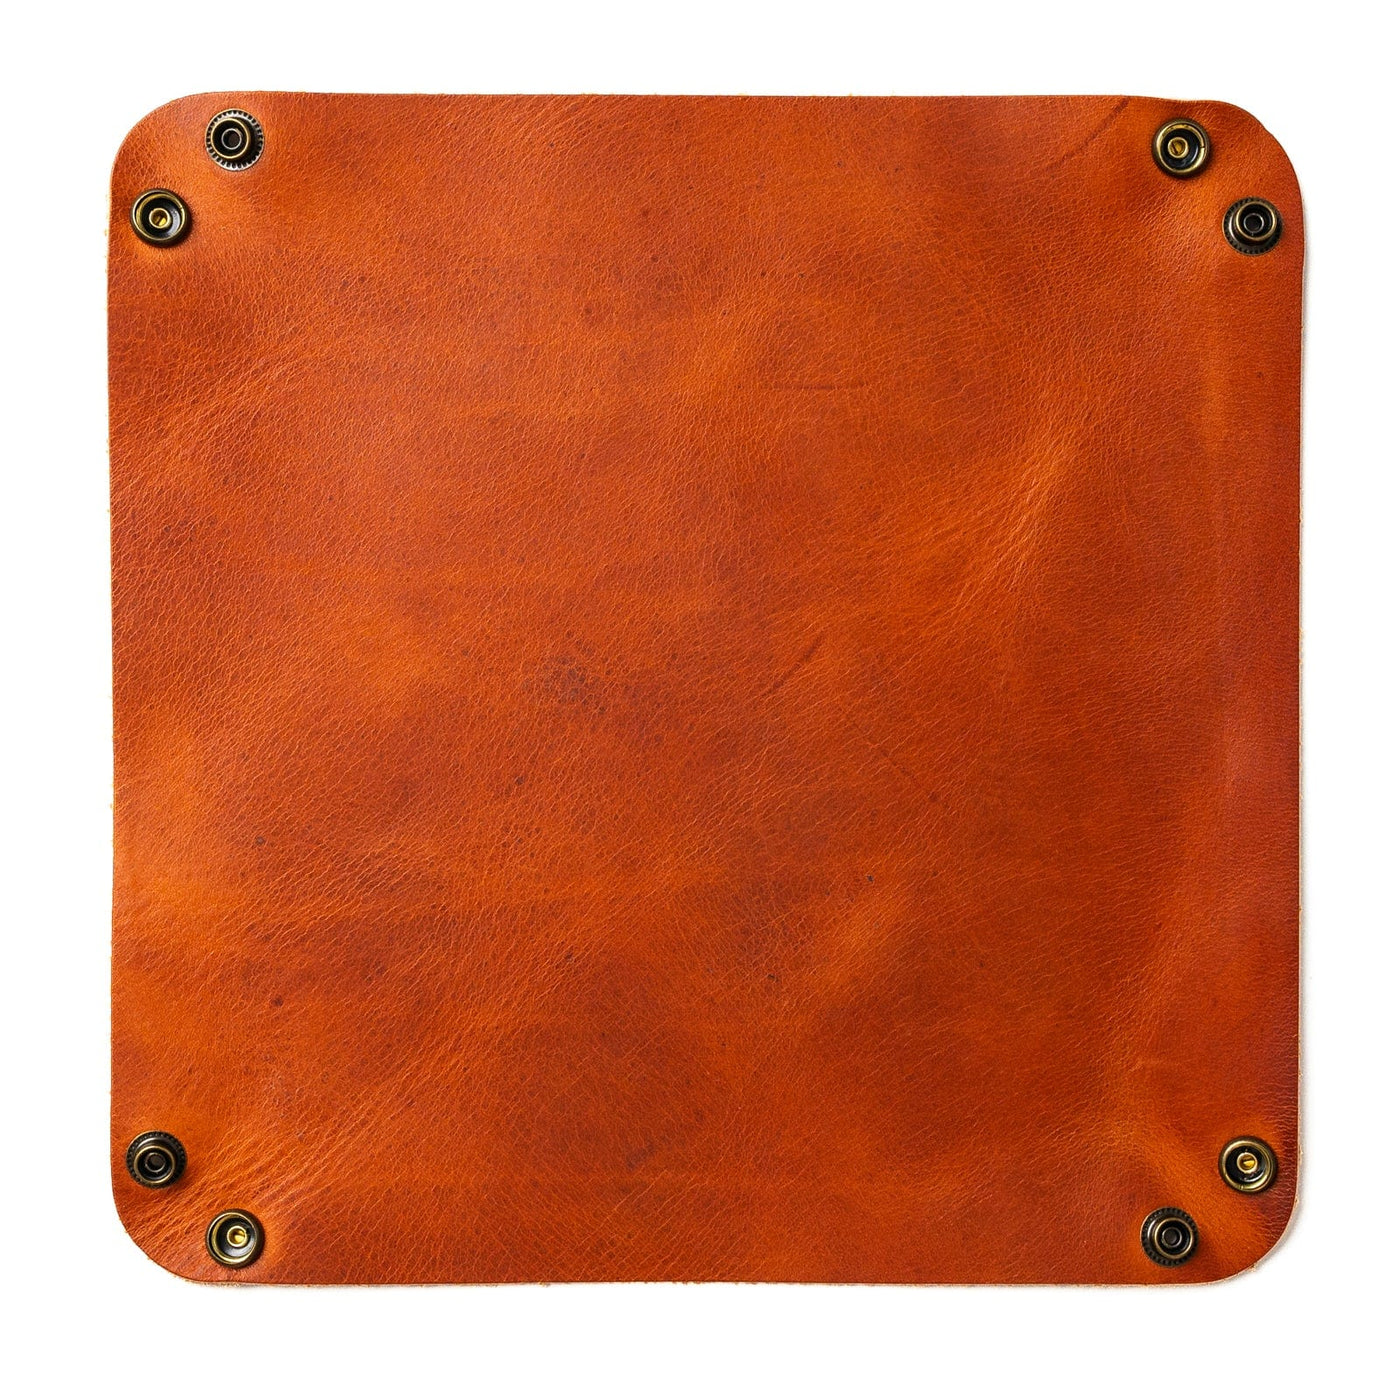 Leather Valet Tray - English Tan Popov Leather